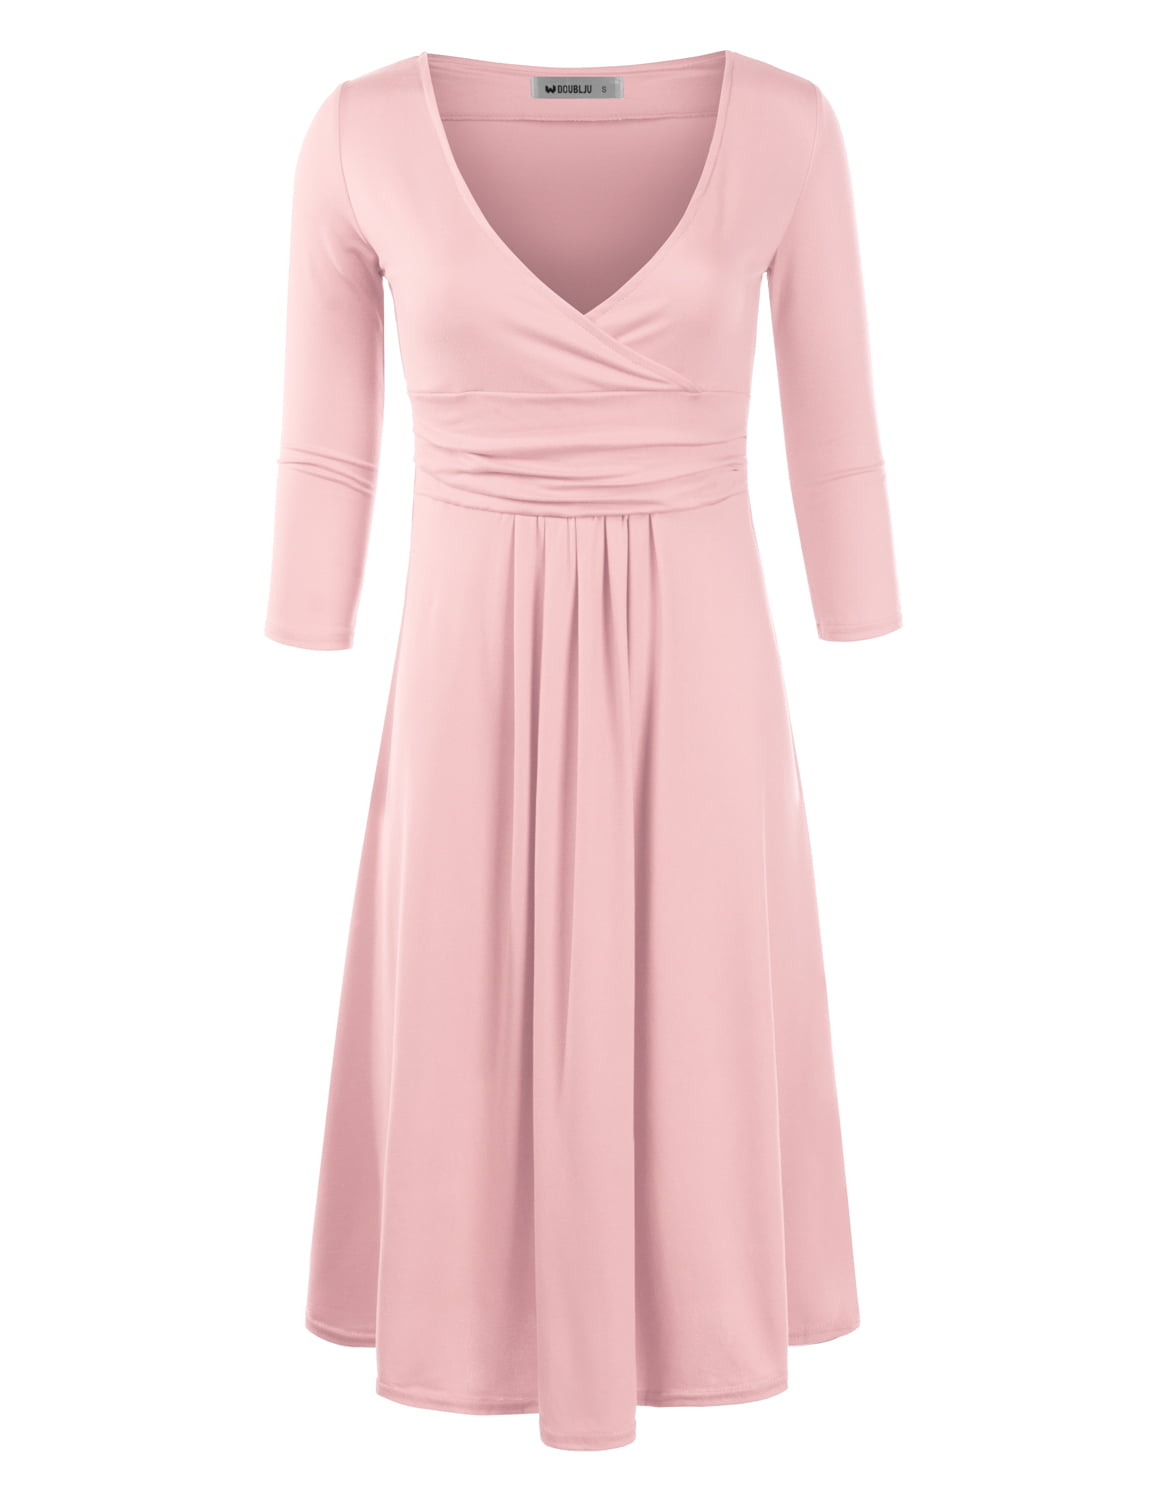 long sleeve casual pink dress